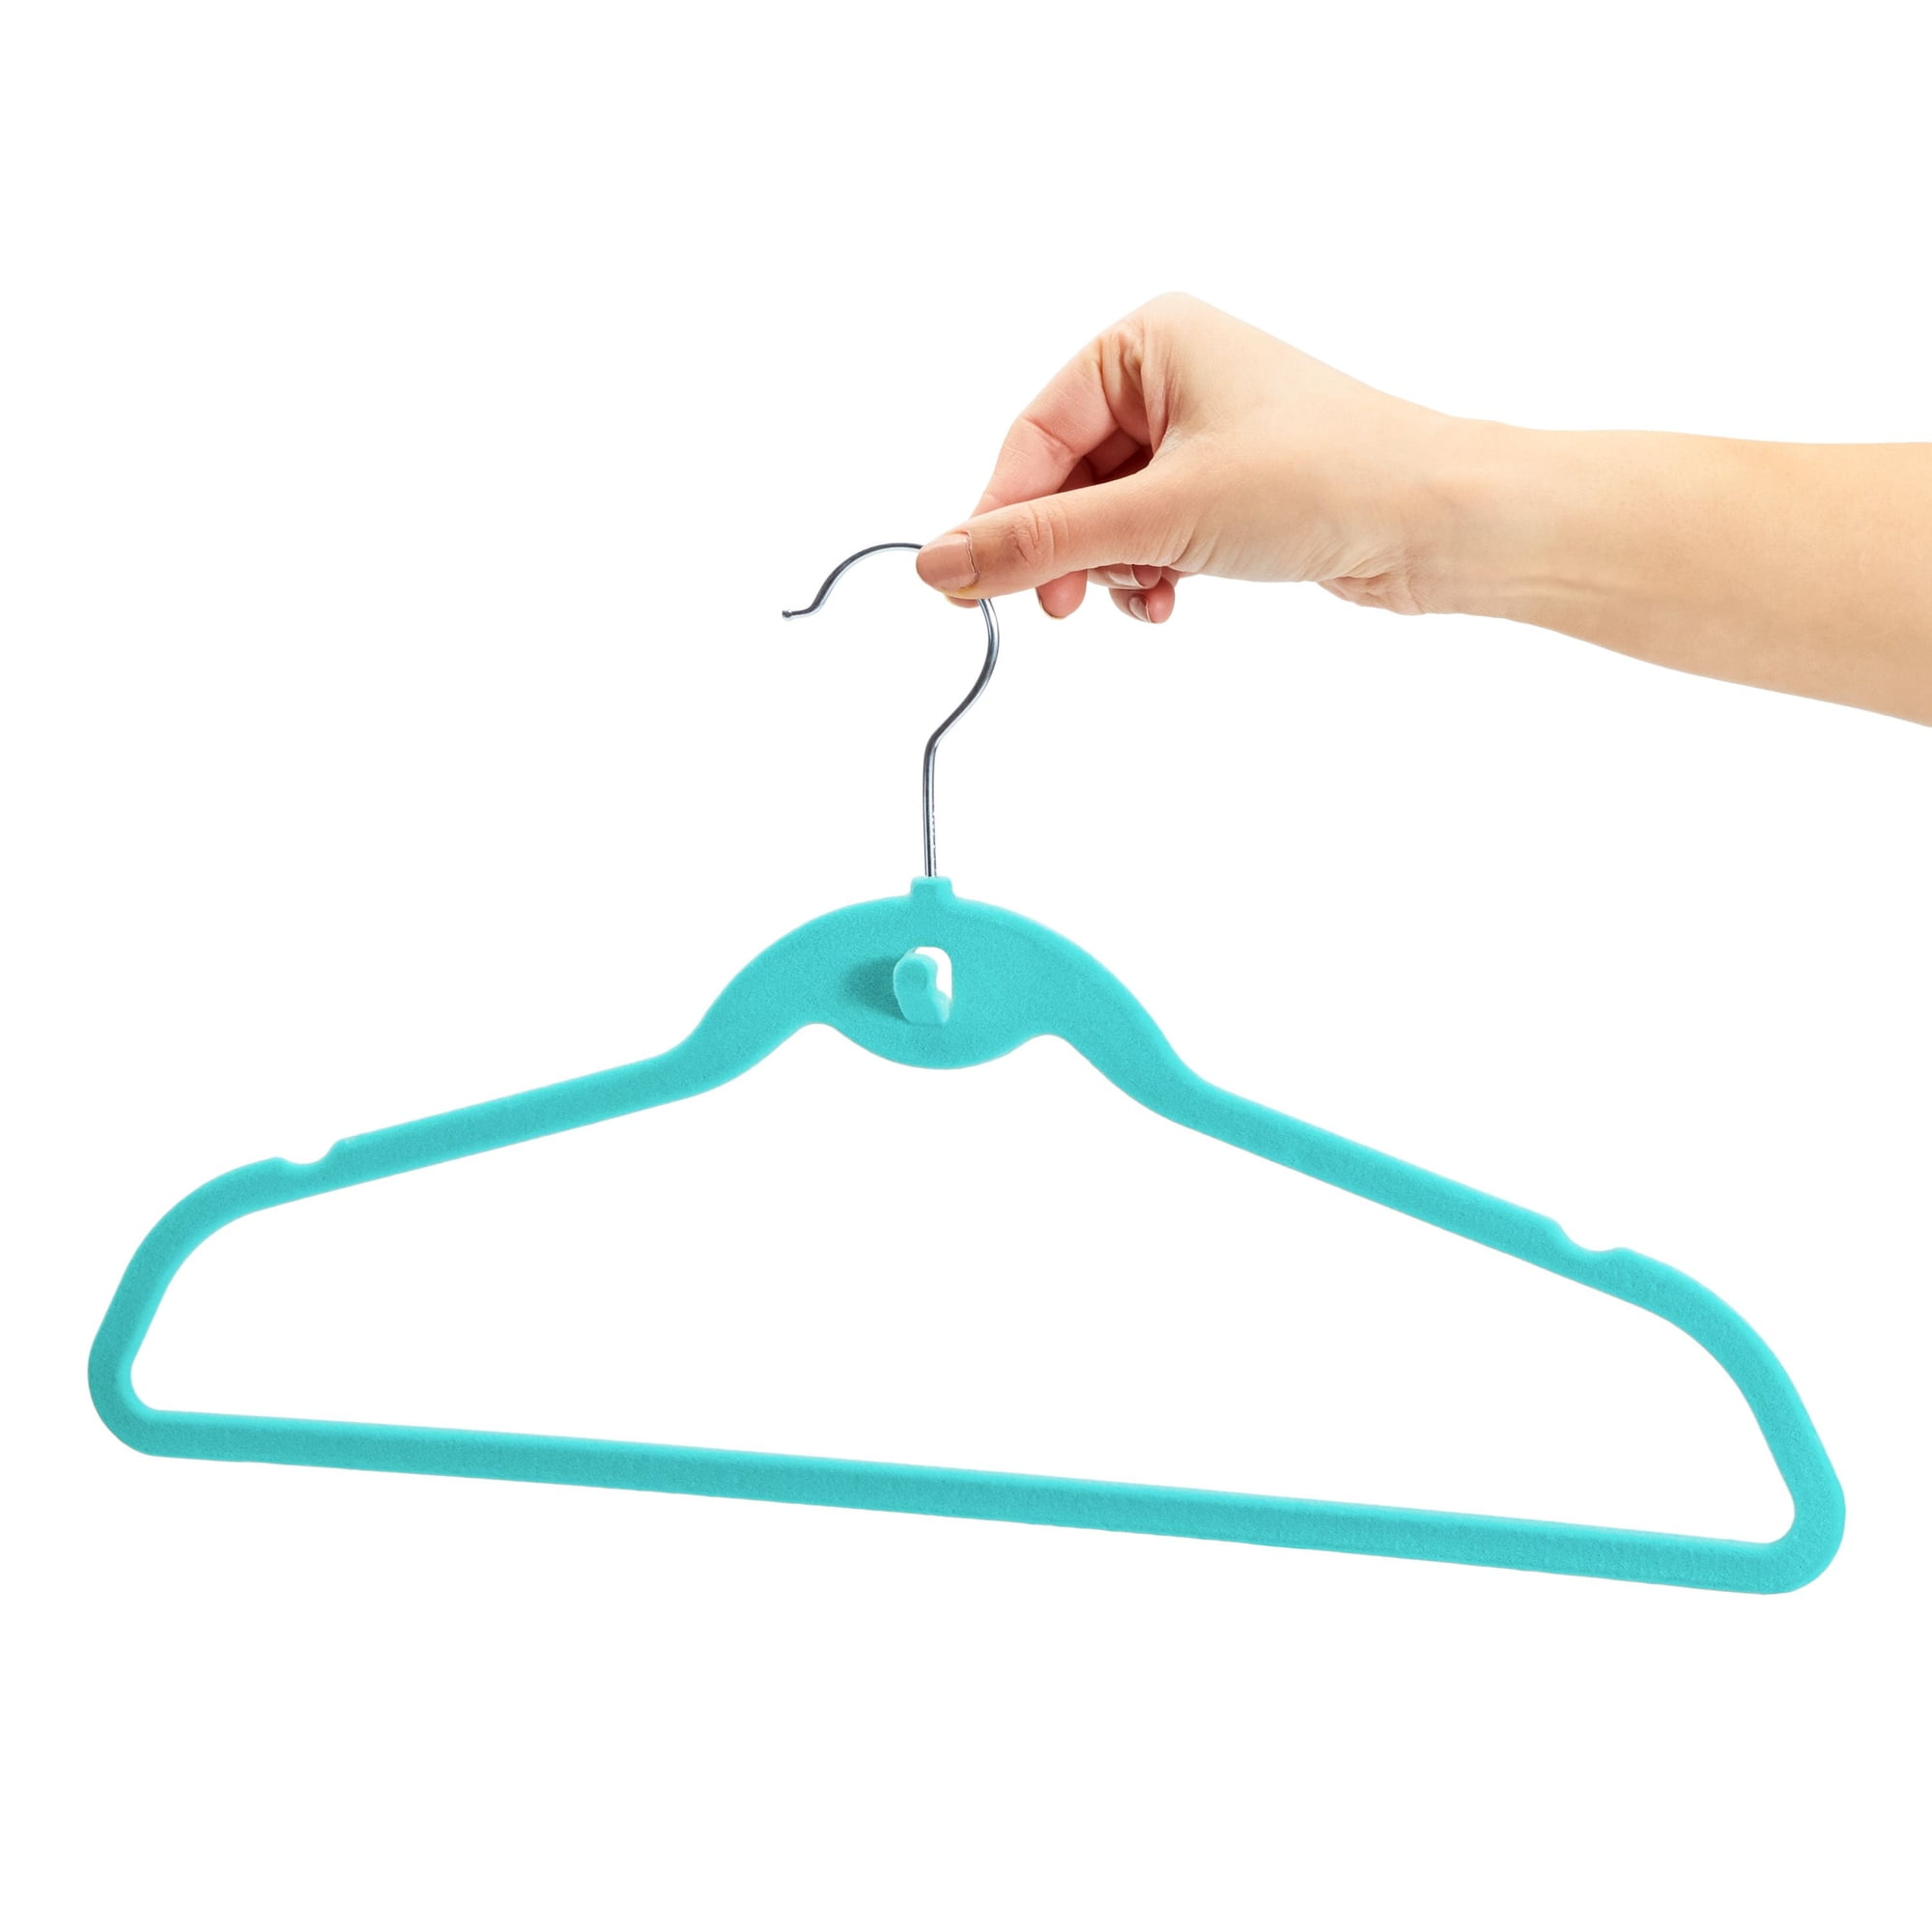 50 Pack Slim Non Slip Teal Velvet Hangers with Cascading Hooks for Clothes,  Shirts, Suits, Dresses, Coat, Pants, Heavy Duty Durable Hangers